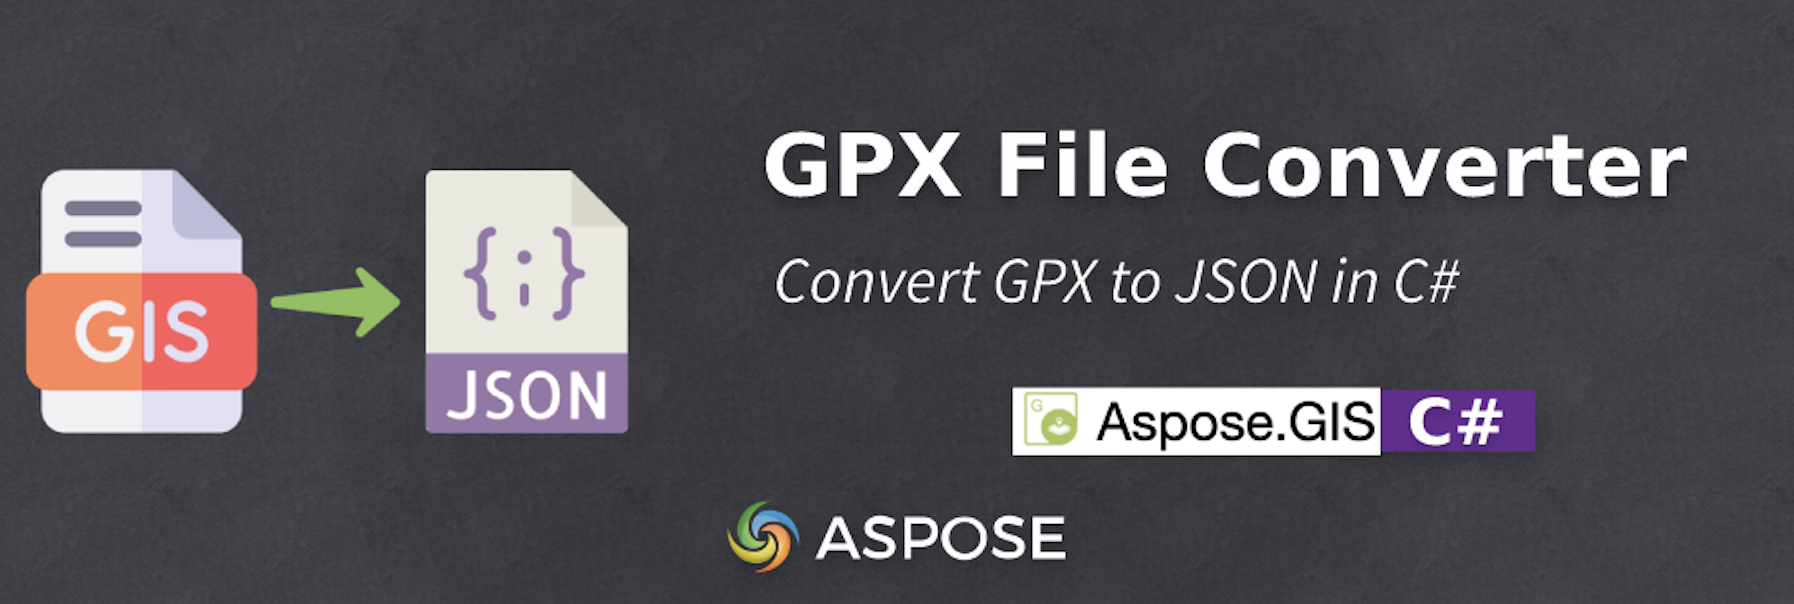 Convertir GPX en JSON en C# - Convertisseur de fichiers GPX